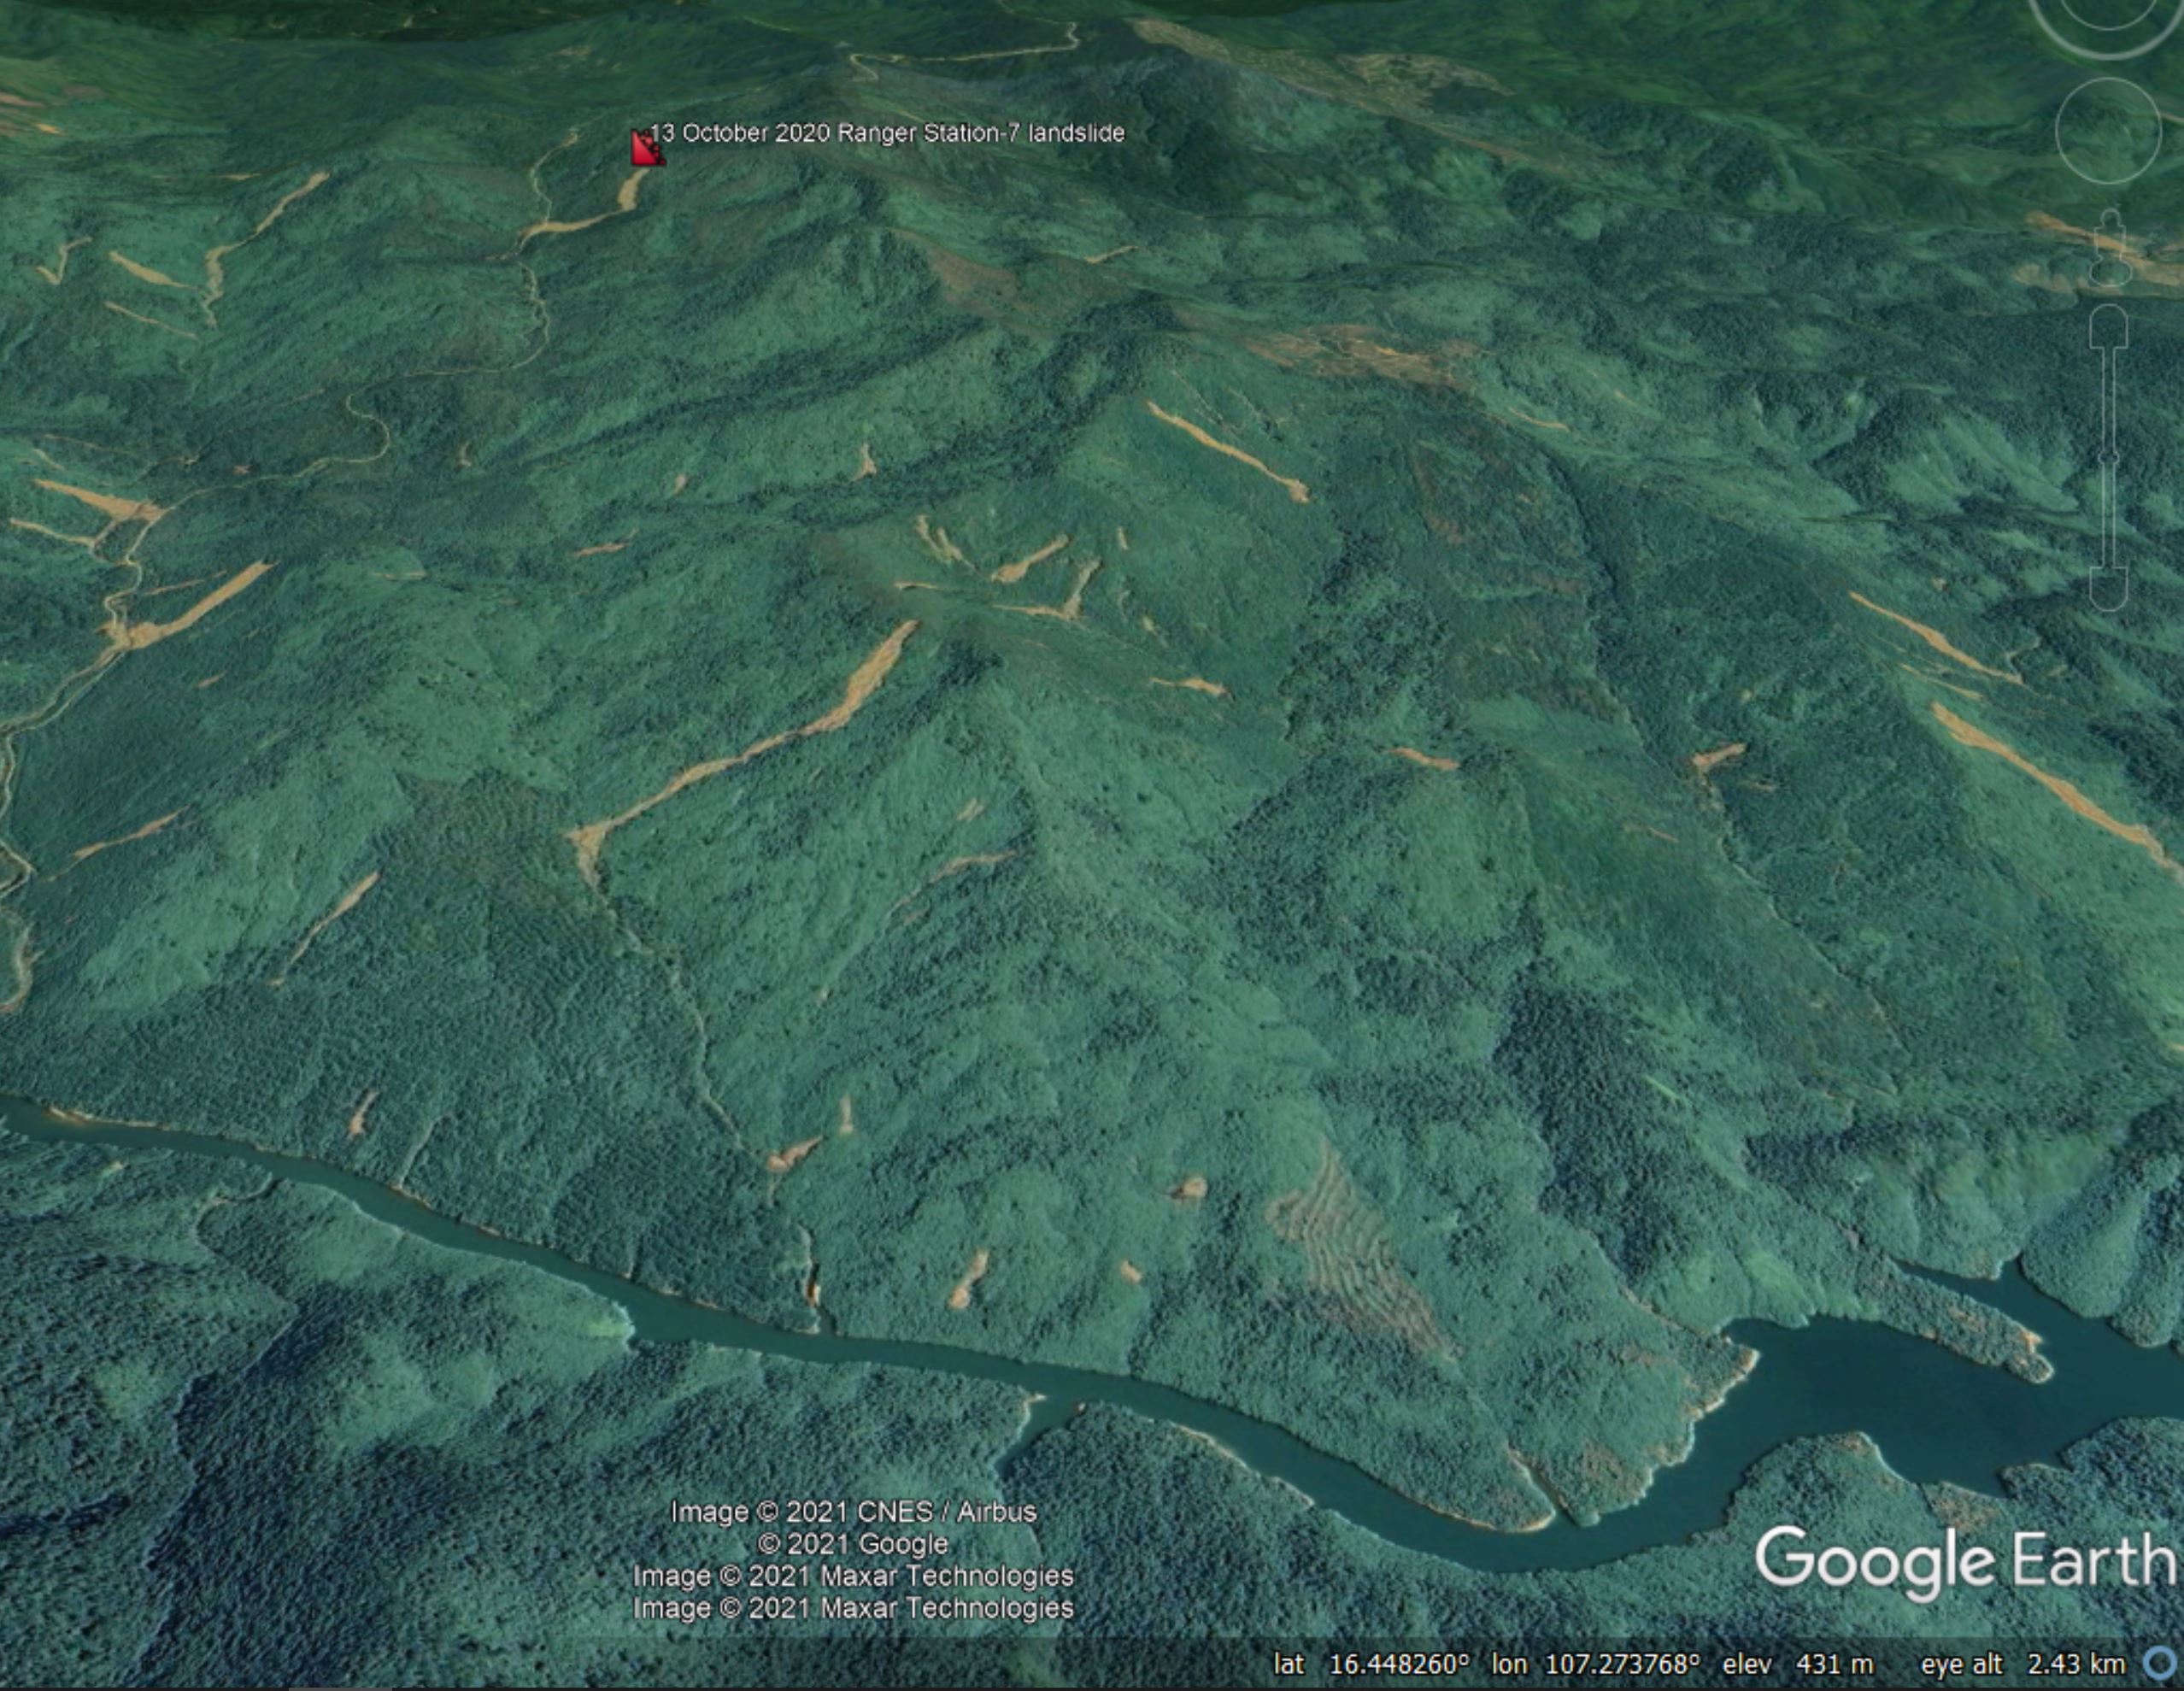 Google Earth image of  landslides triggered by the October 2020 rain event in Phong Dien, Vietnam.